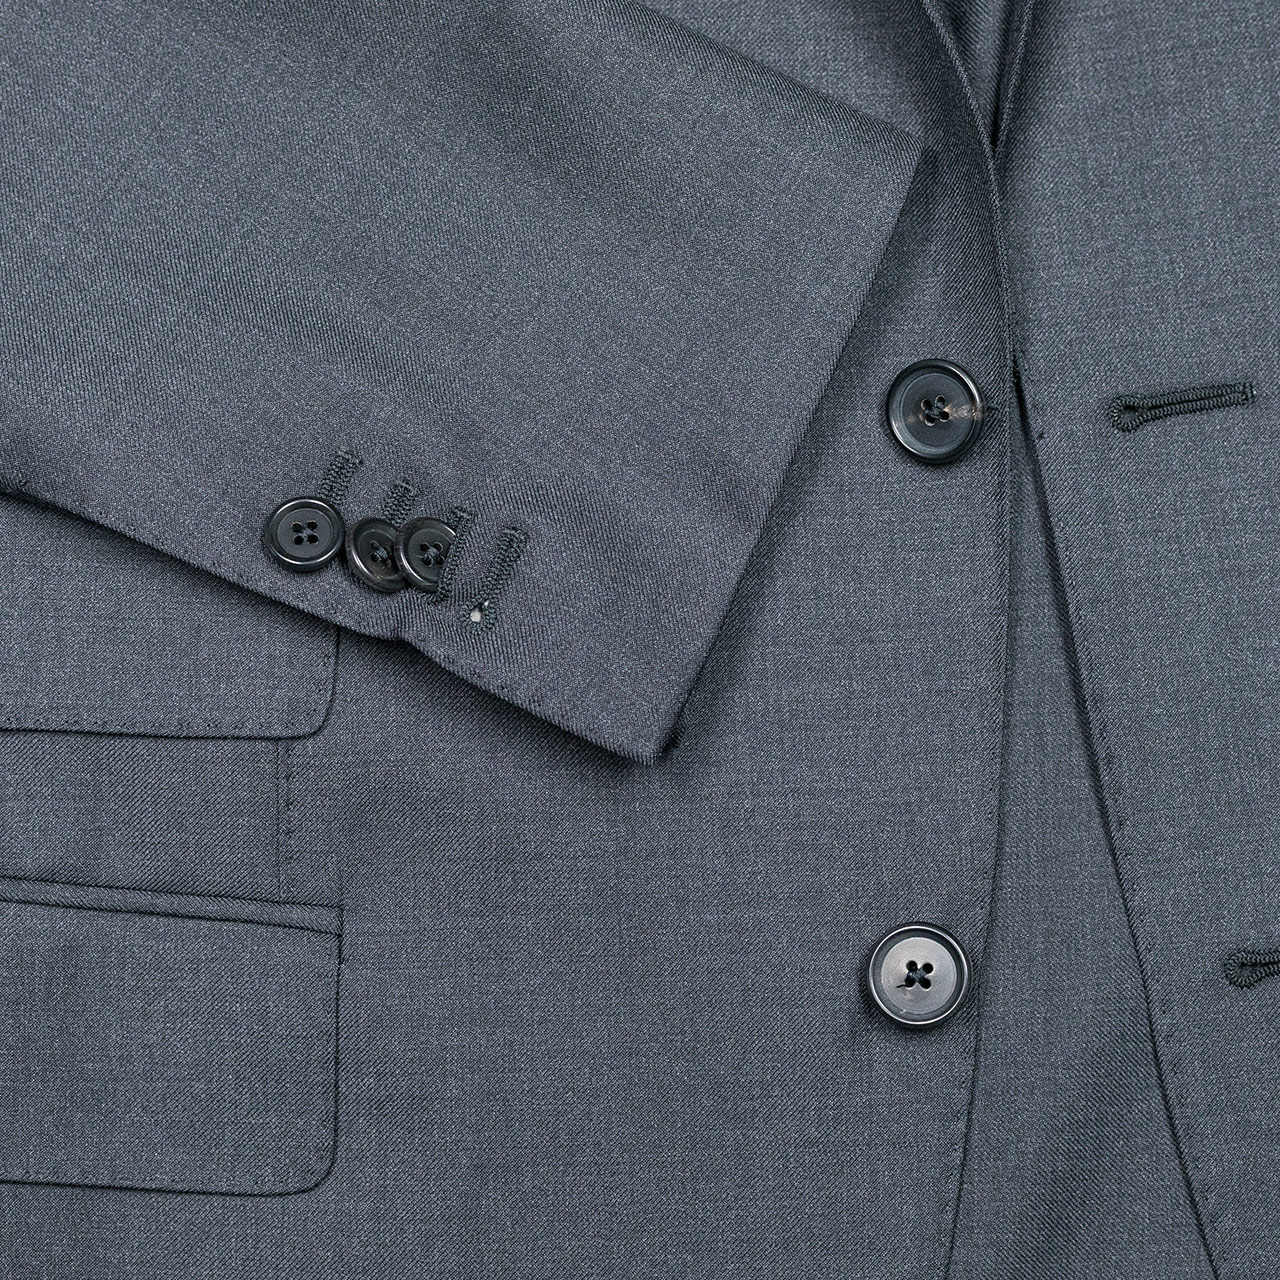 Caruso Anzug in anthrazitgrau aus "Connaisseur Superfine 130'S" Wolle